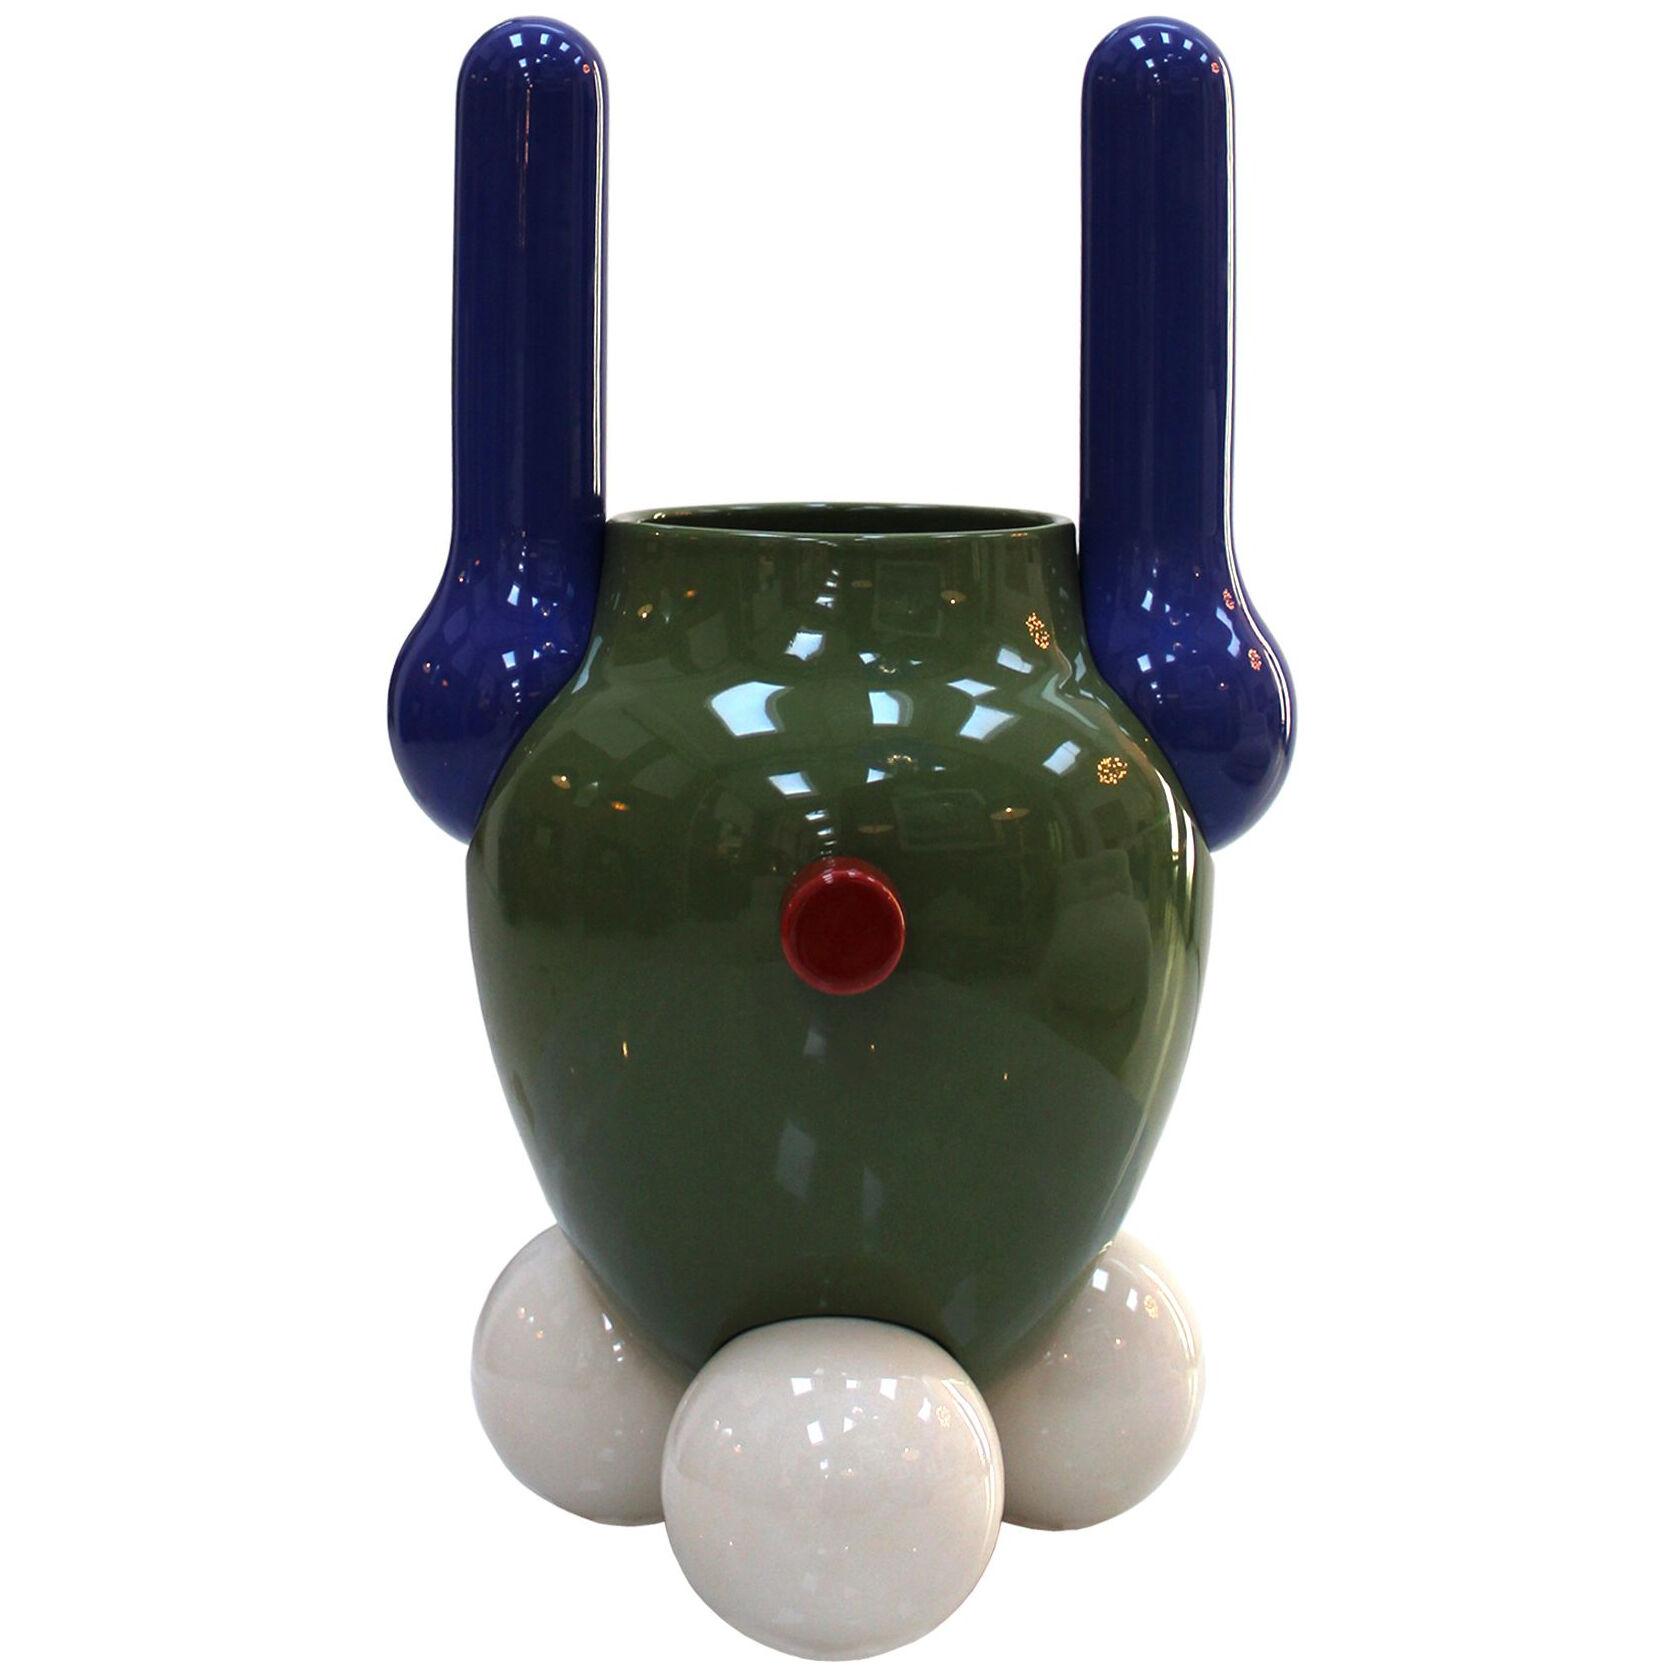 Contemporary Vase Made of Ceramic Designed by Jaime Hayón